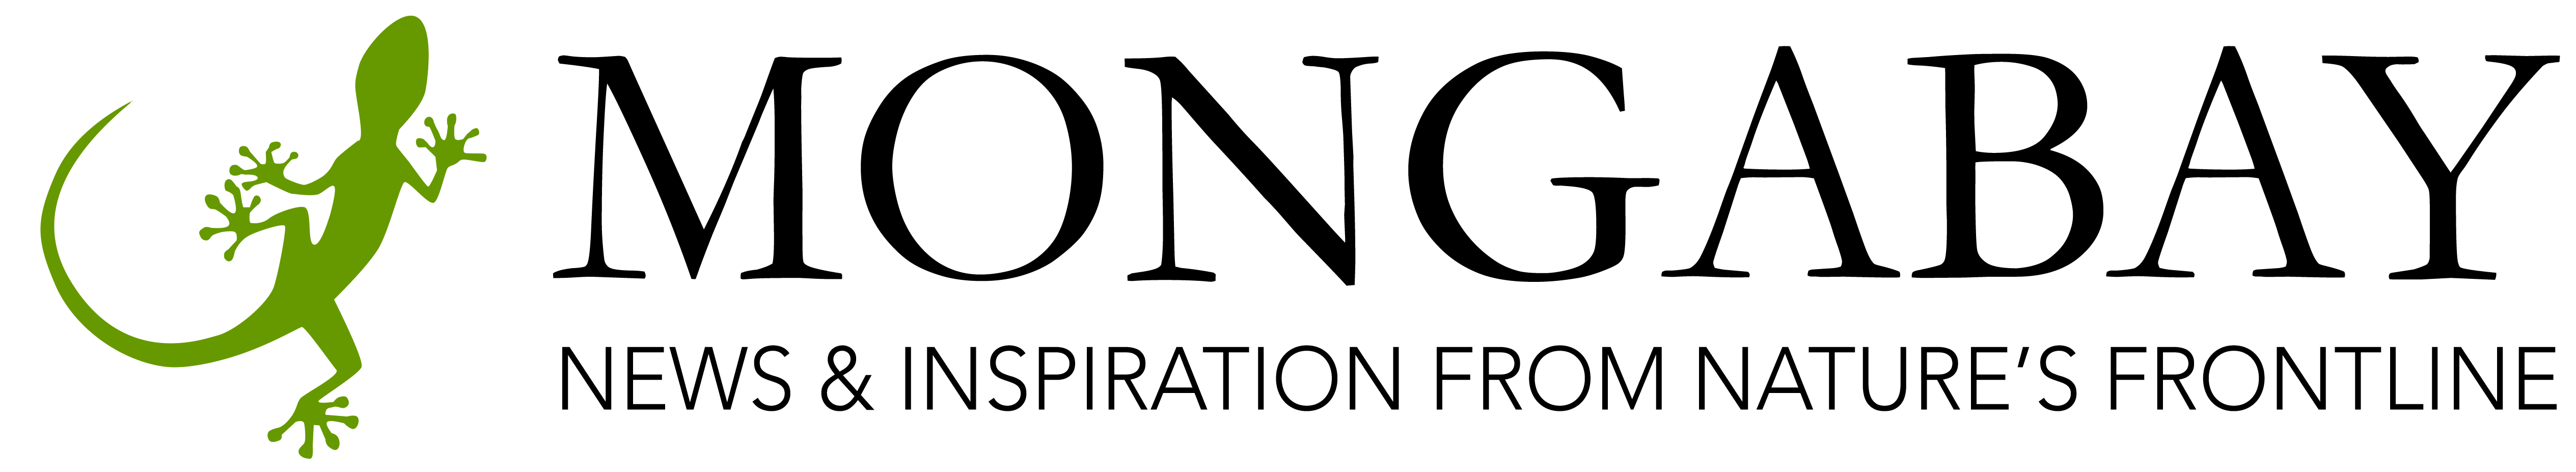 Mongabay black PNG logo with the tagline on a transparent background